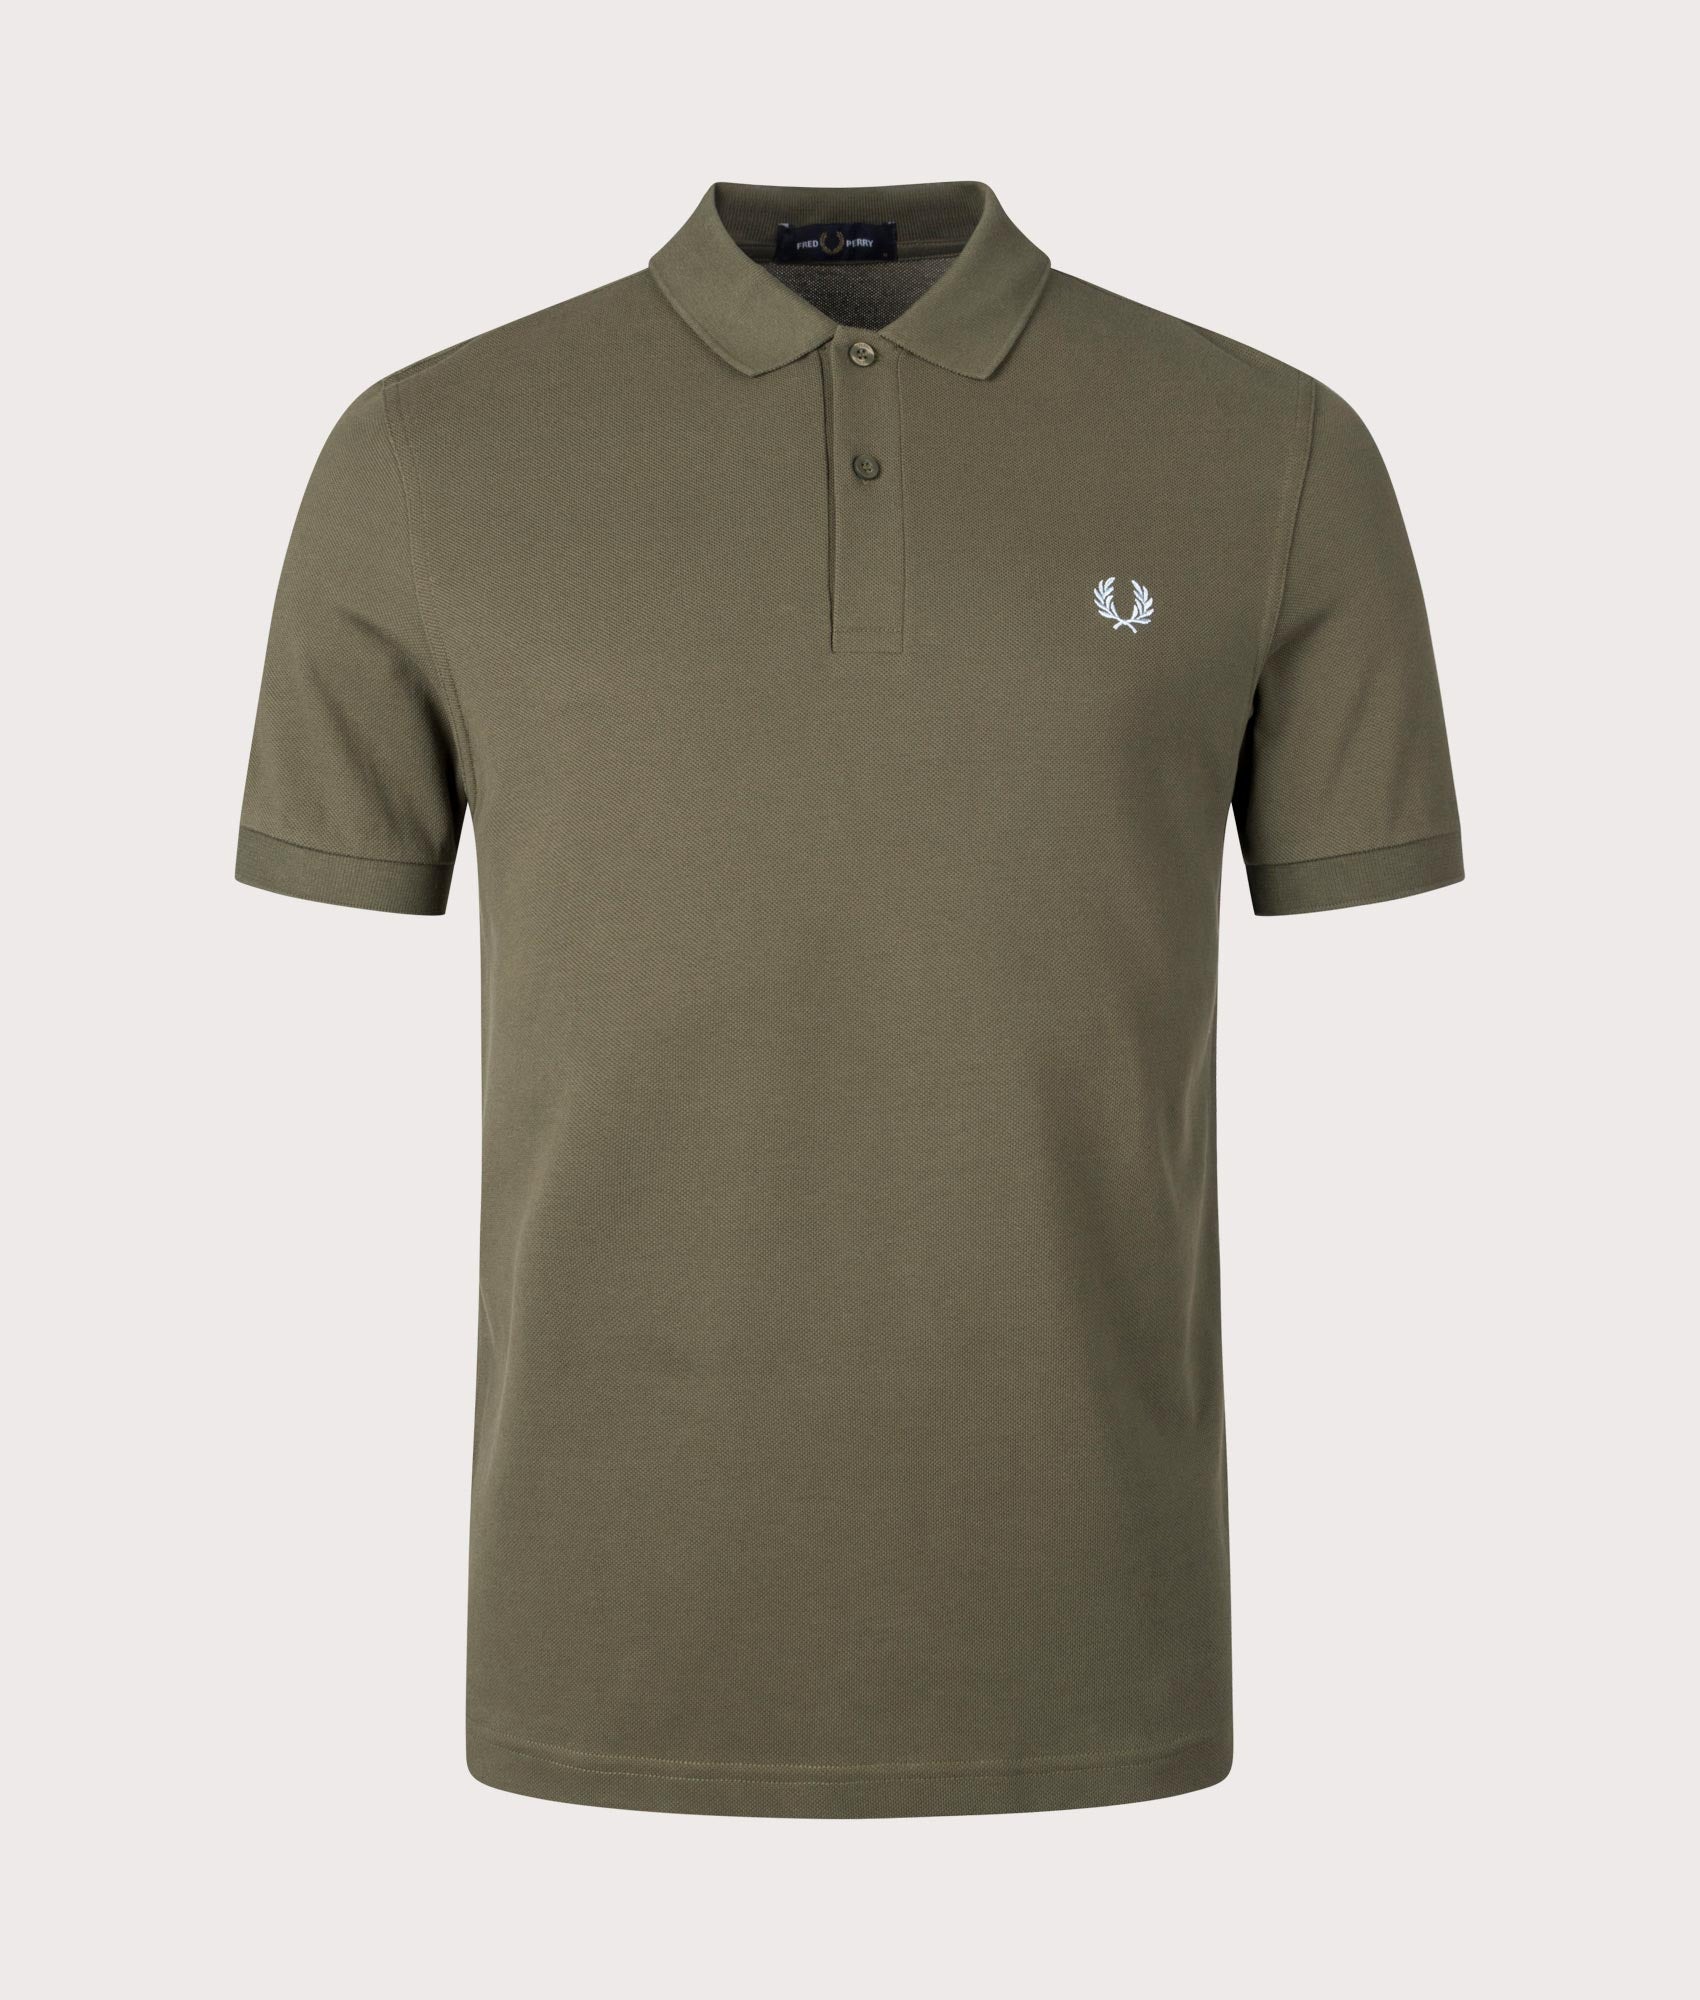 Fred Perry Mens Plain Polo Shirt - Colour: V41 Uniform Green/Light Ice - Size: XXL